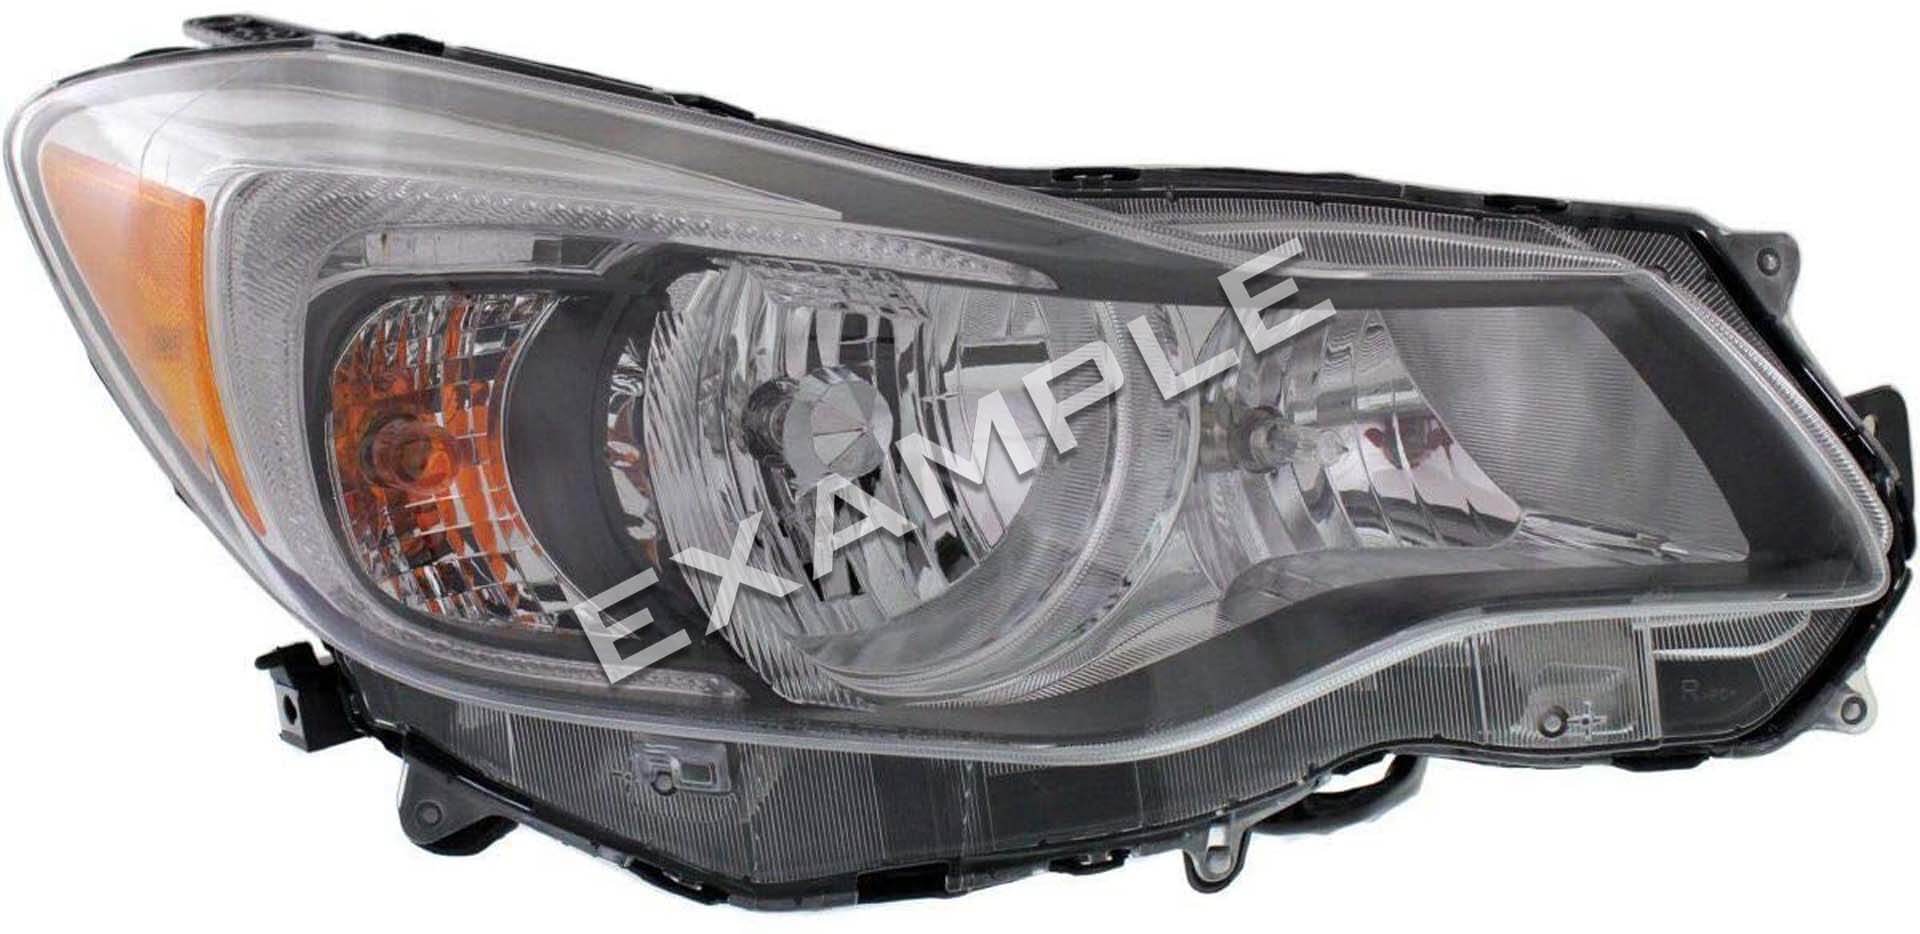 Subaru Impreza IV 12-18 bi-xenon light upgrade kit pour phares halogènes